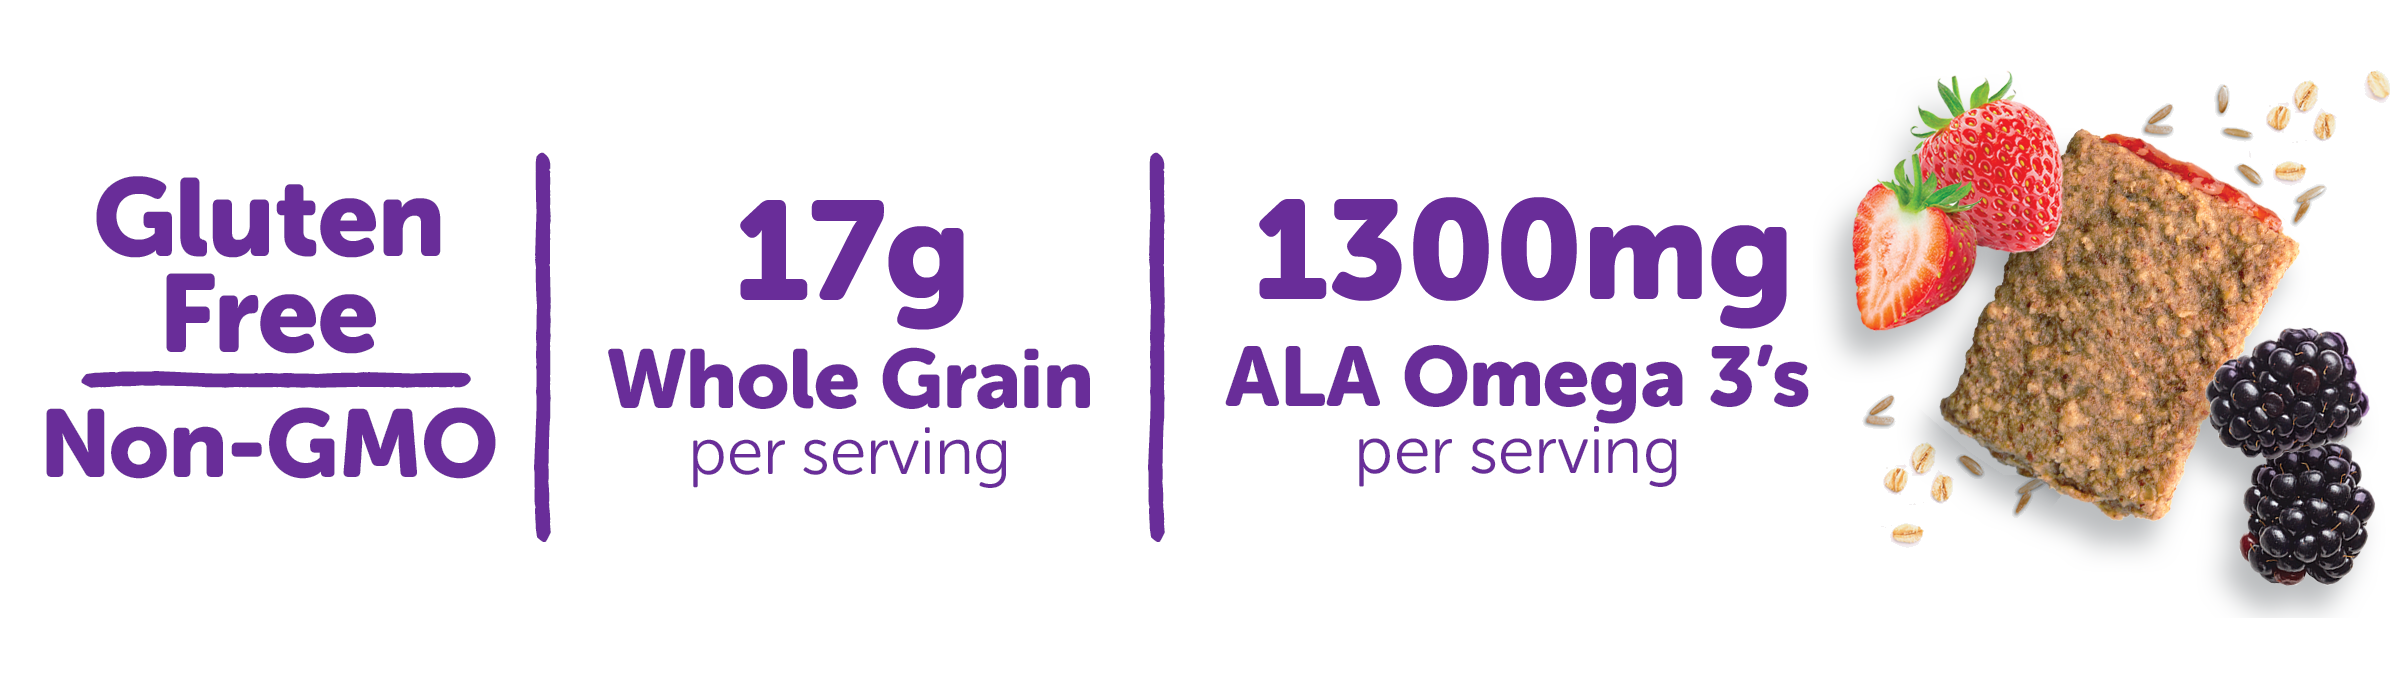 Gluten Free / 17g Whole Grain per serving / 1300mg ALA Omega per serving